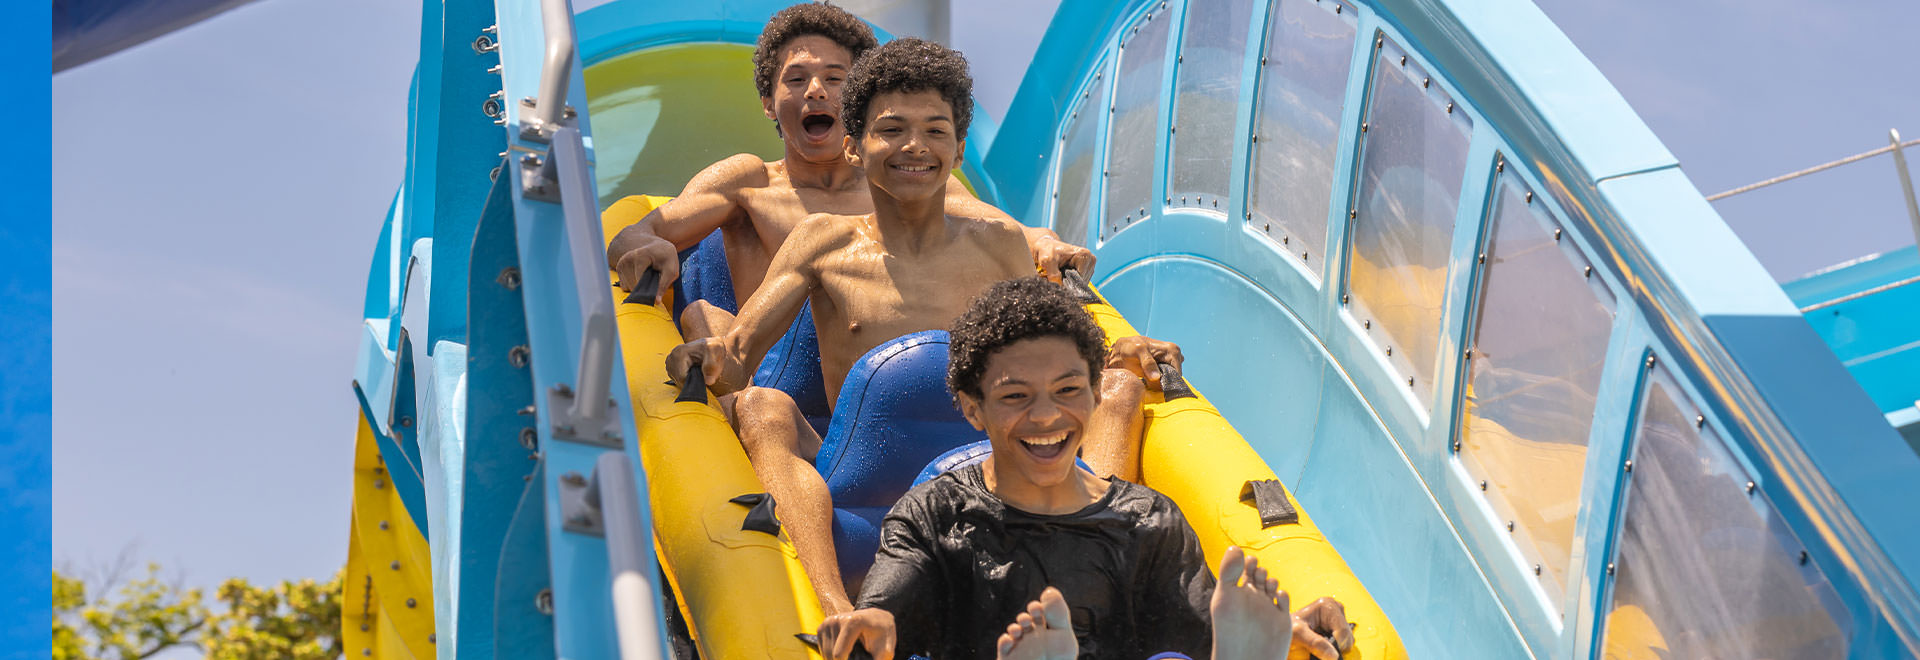 Three kids riding the Rocket Blast water ride